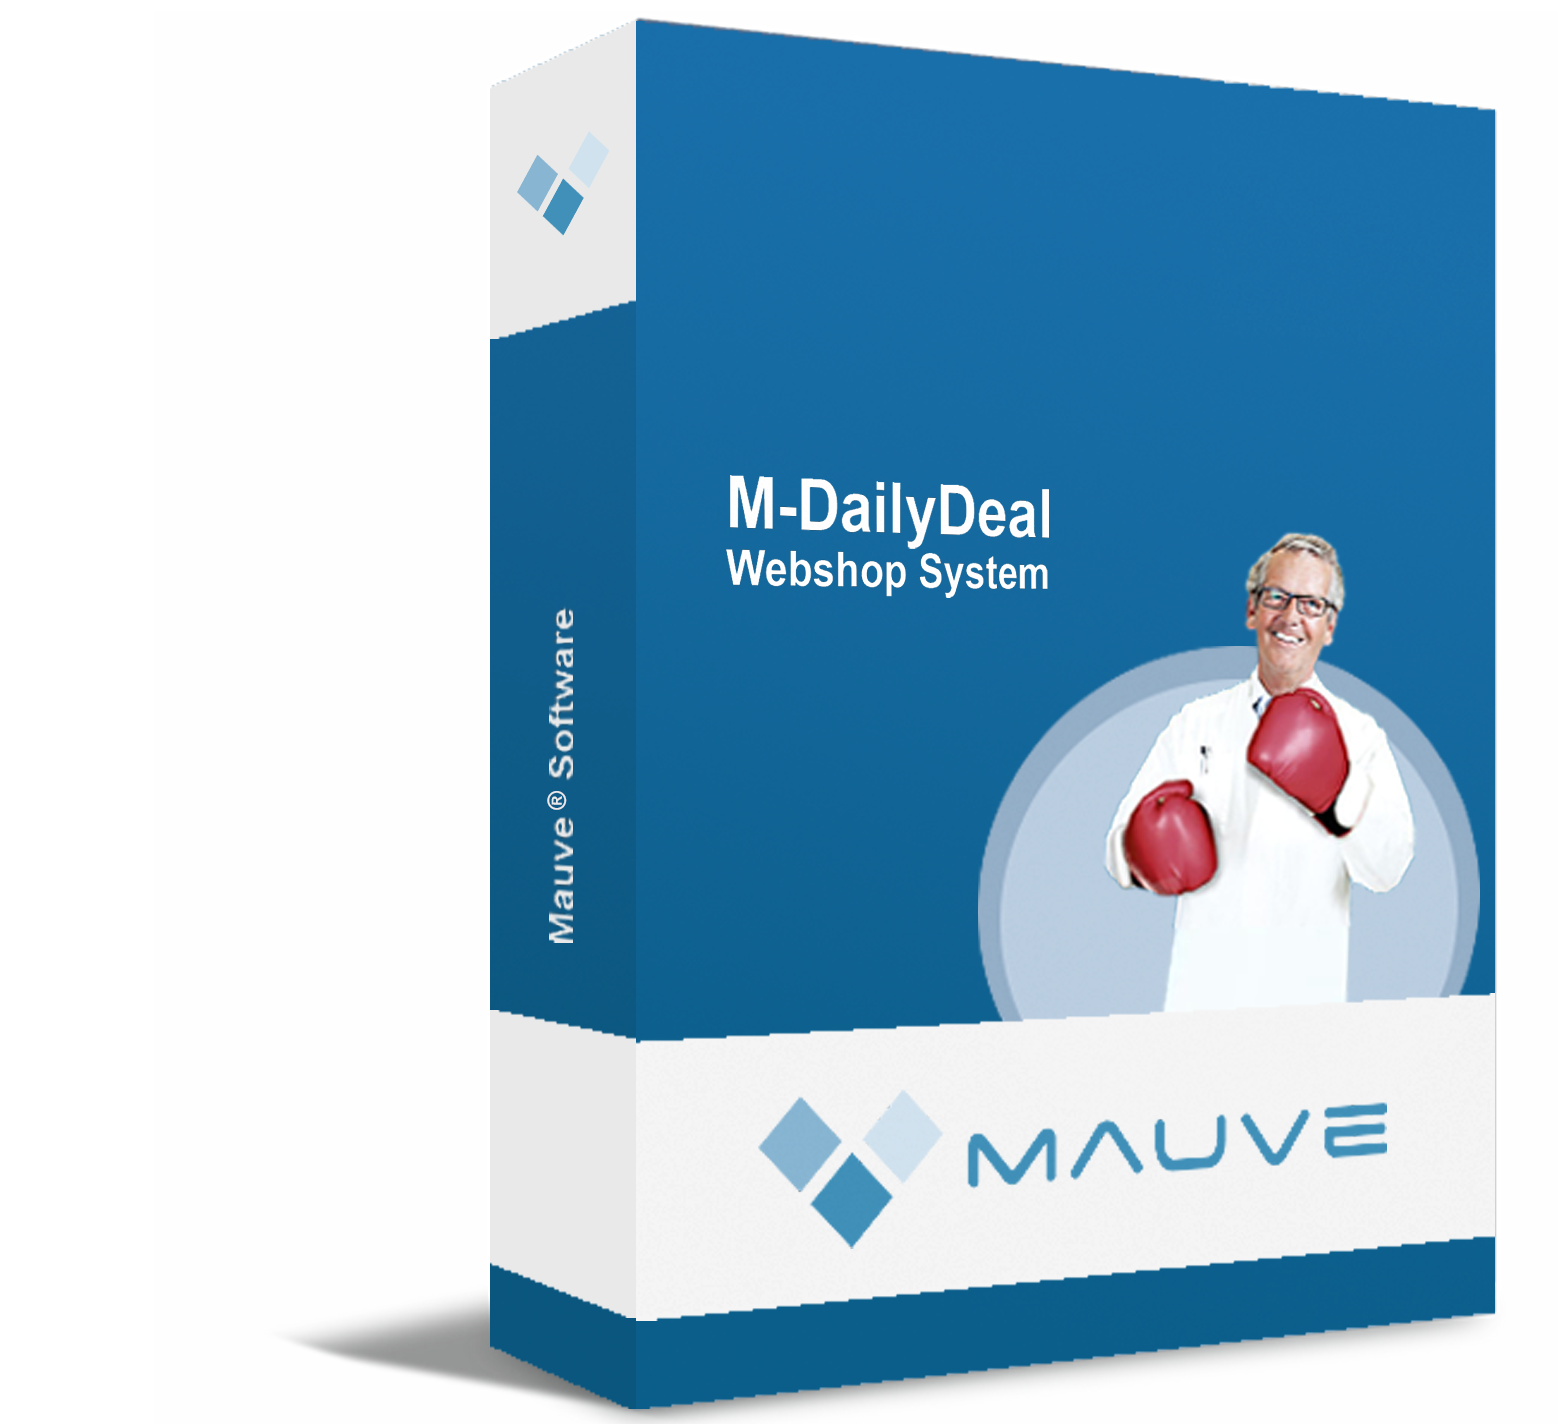 M-DailyDeal